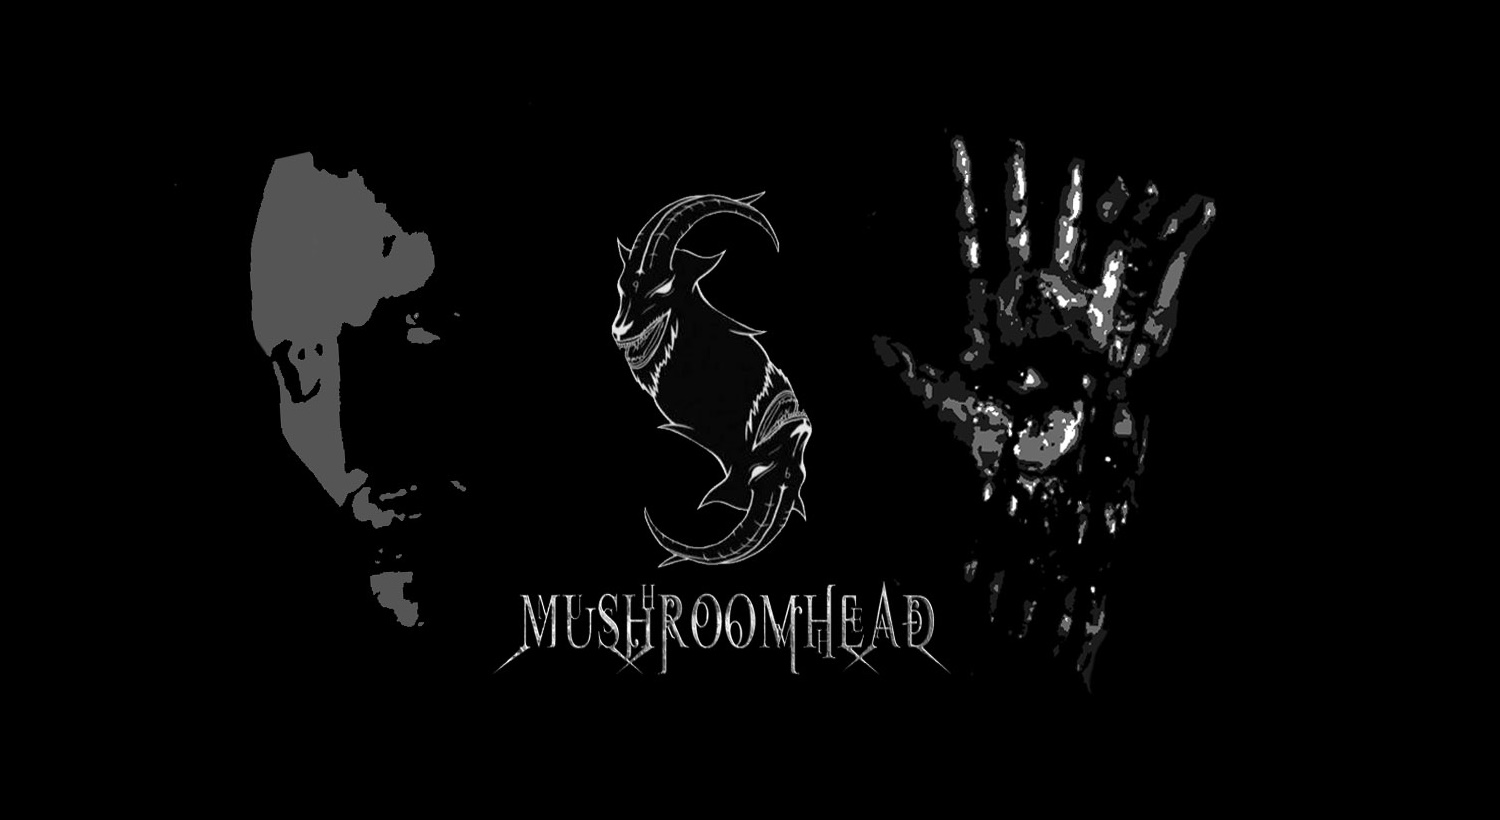 Mushroomhead Metal Band Nu Metal Alternative Metal Slipknot Corey Taylor 1500x820